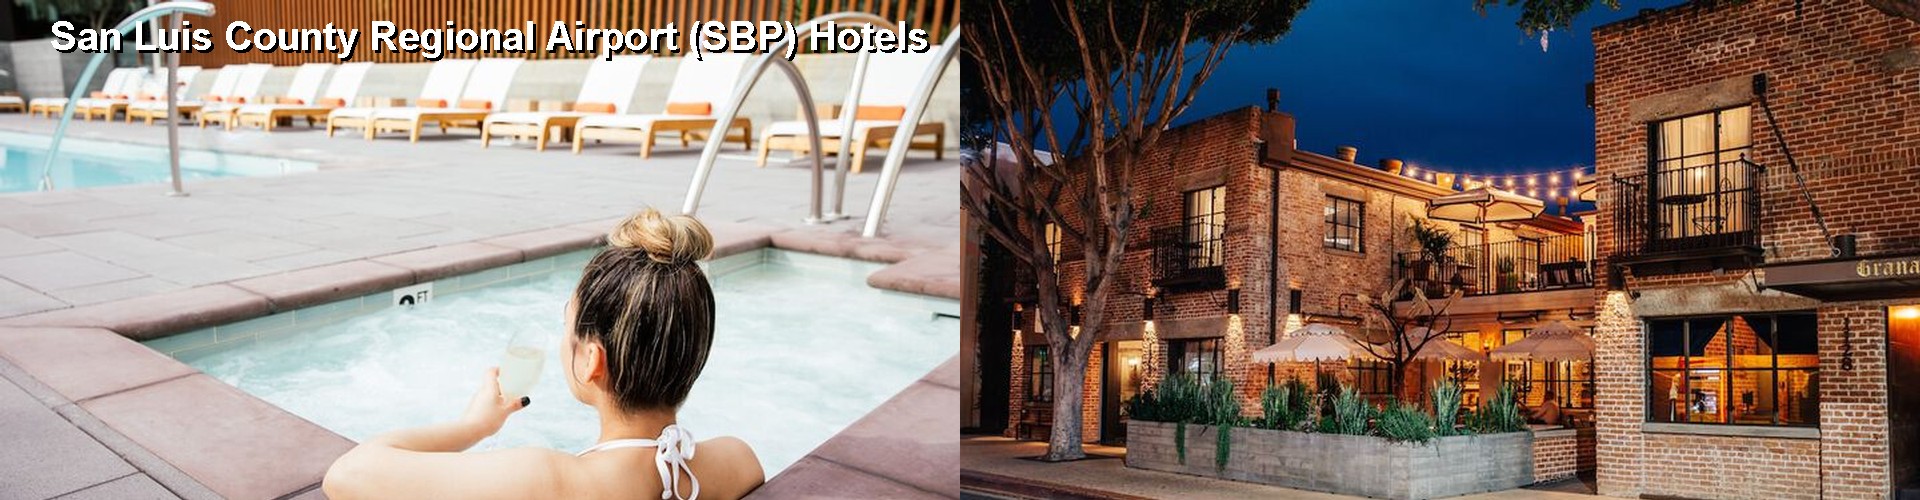 3 Best Hotels near San Luis County Regional Airport (SBP)